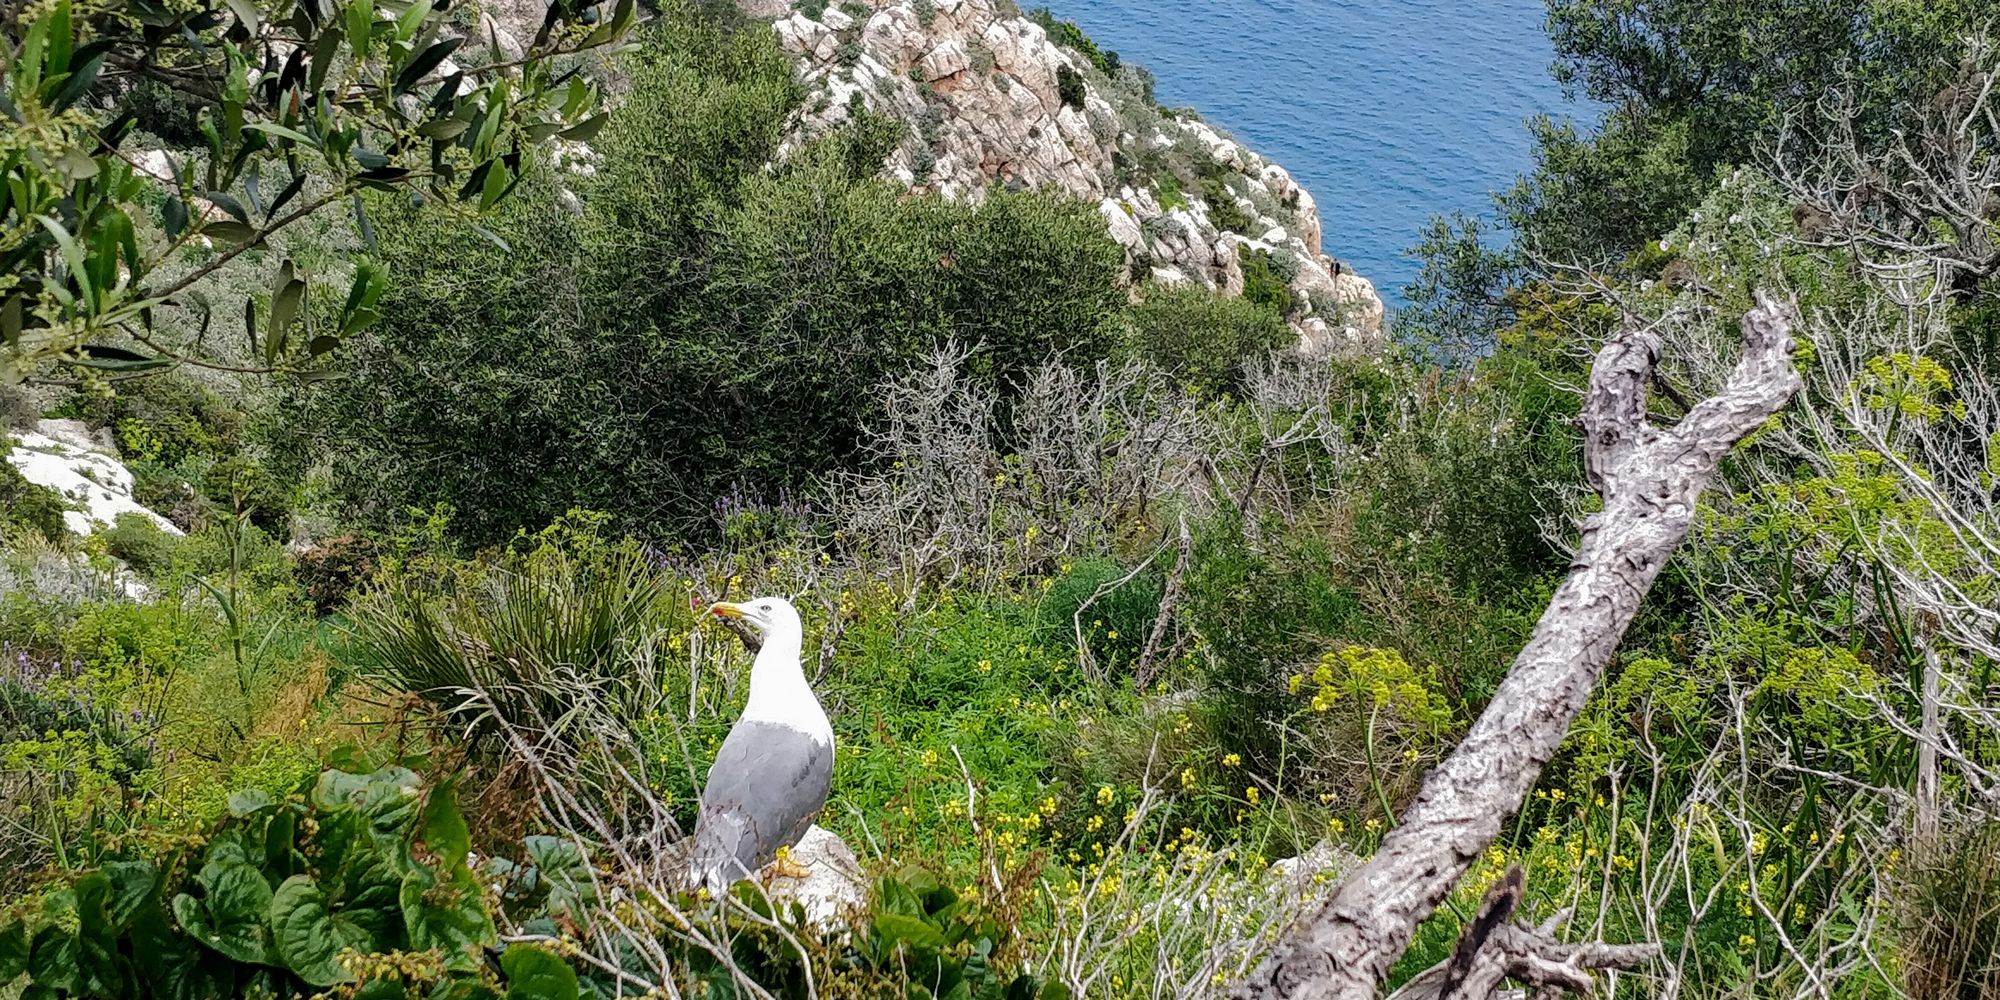 El Peñón de Ifach. Hiking Above Seagulls (Apr 2021)